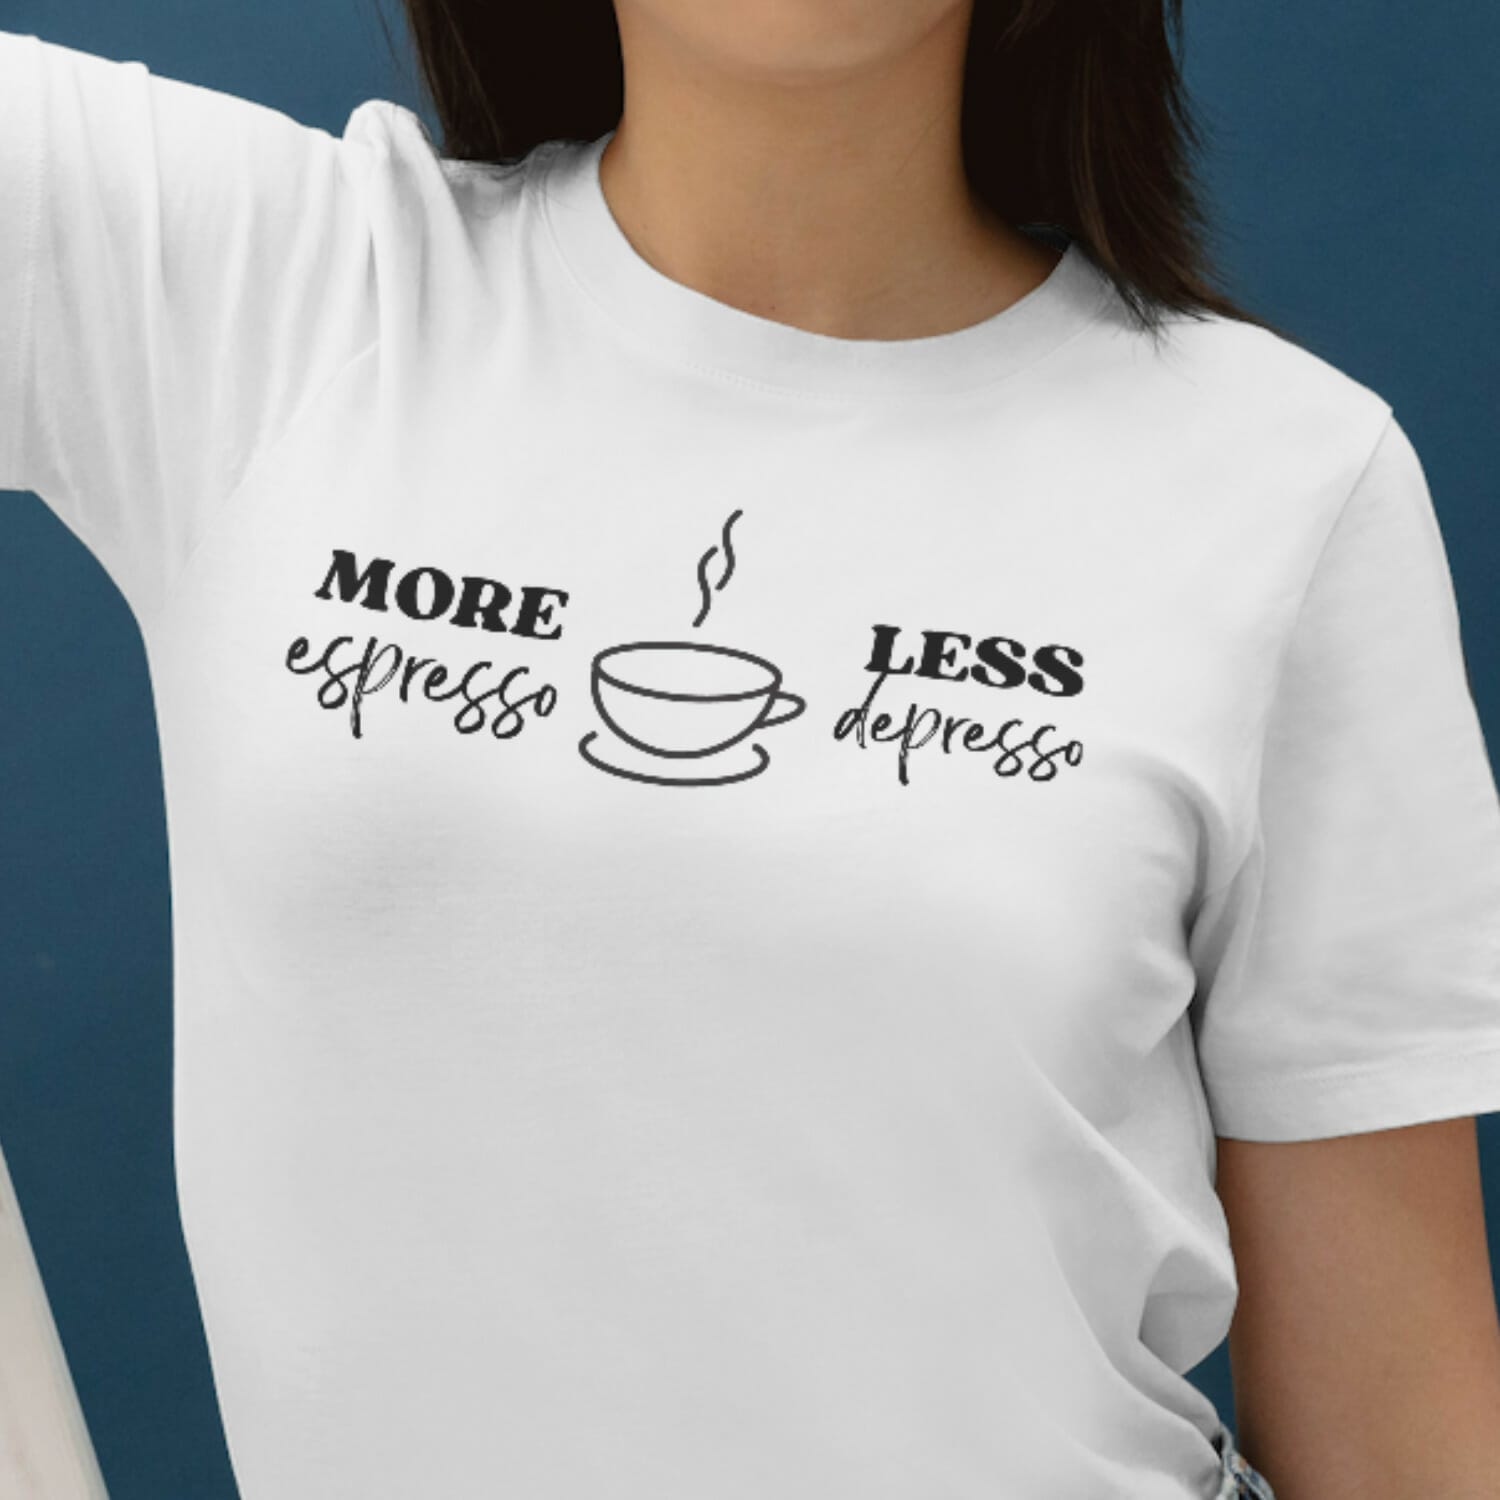 More espresso Less depresso Free Tshirt design